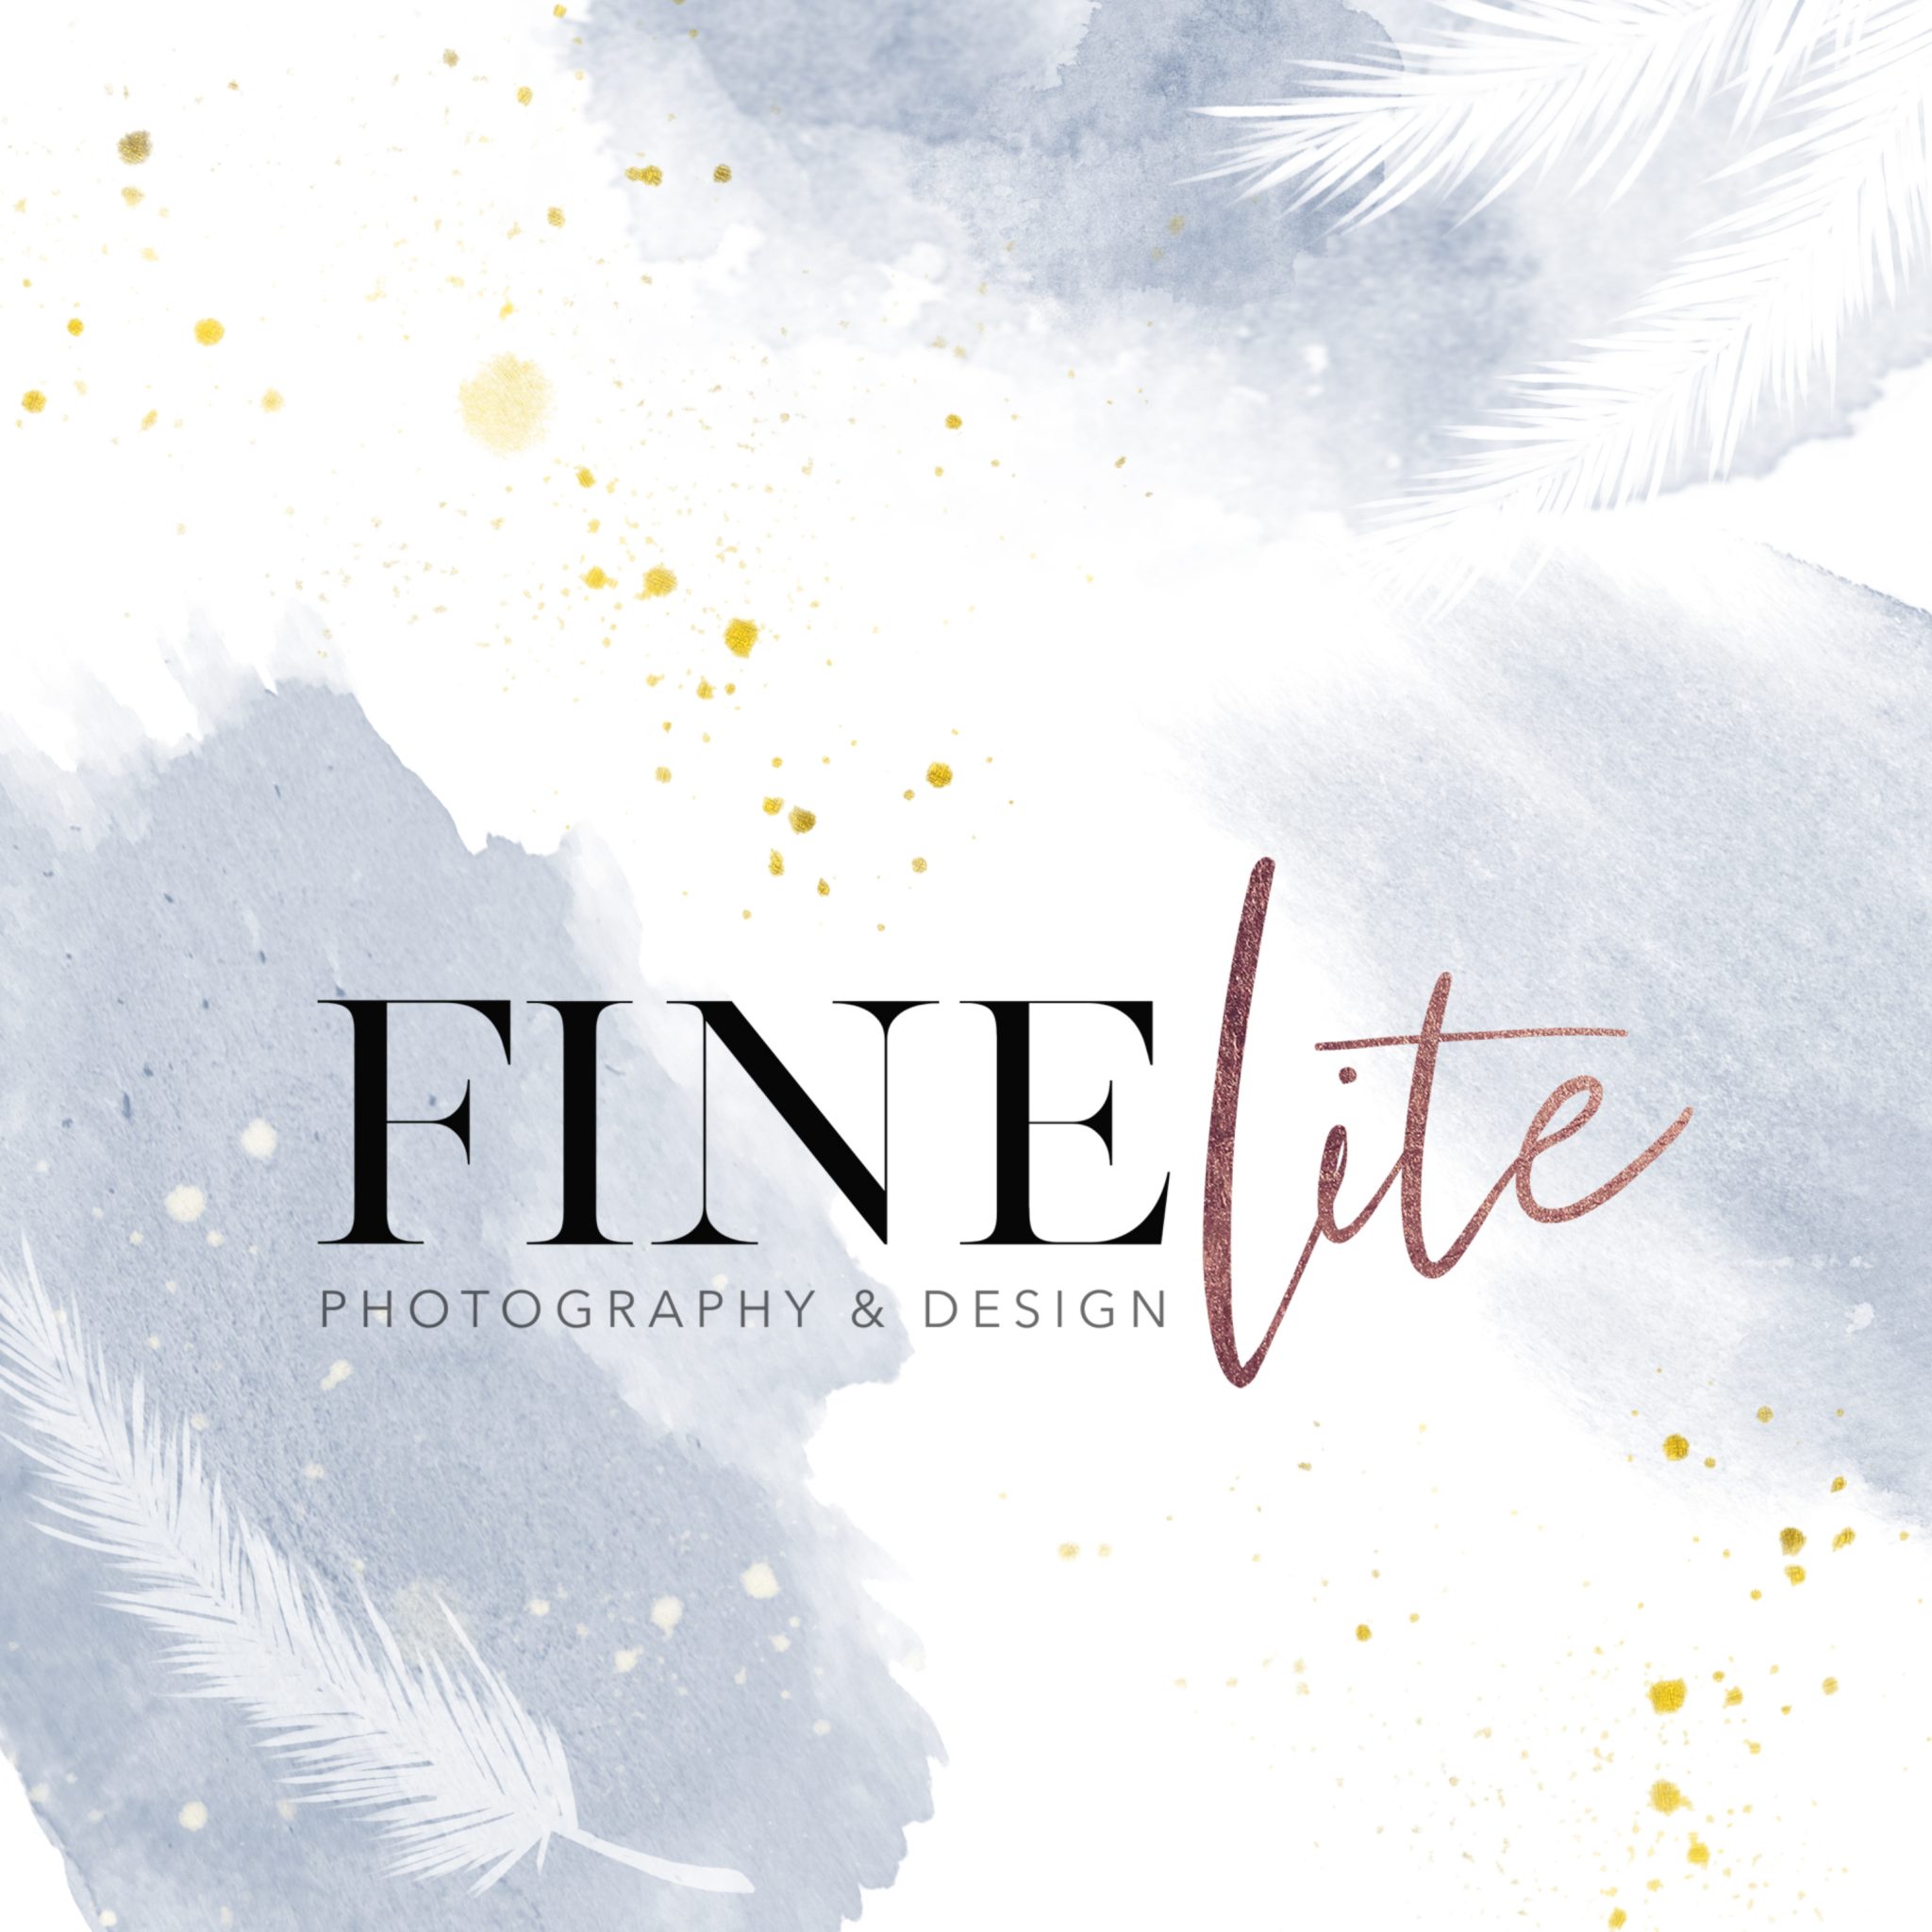 Finelite Photography & Design